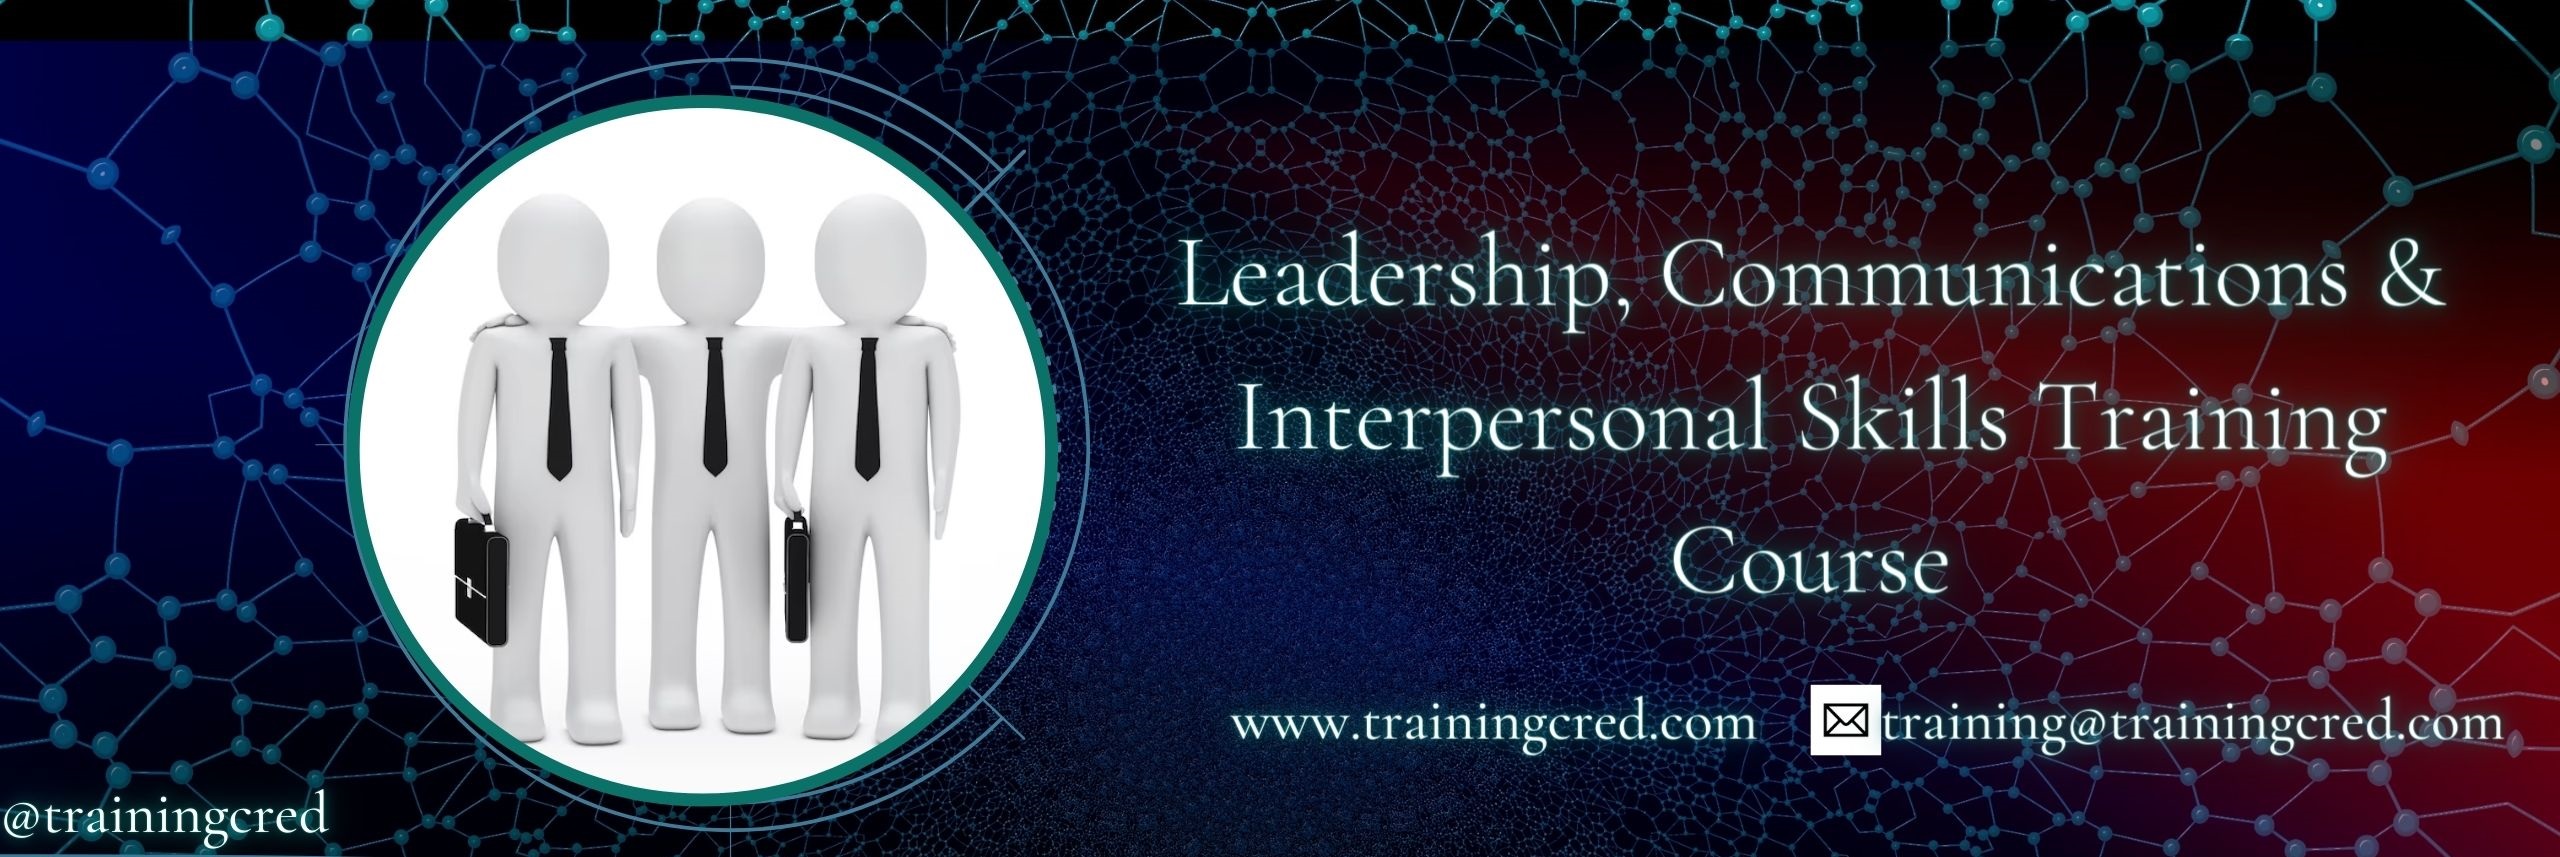 Leadership, Communications and Interpersonal Skills Training